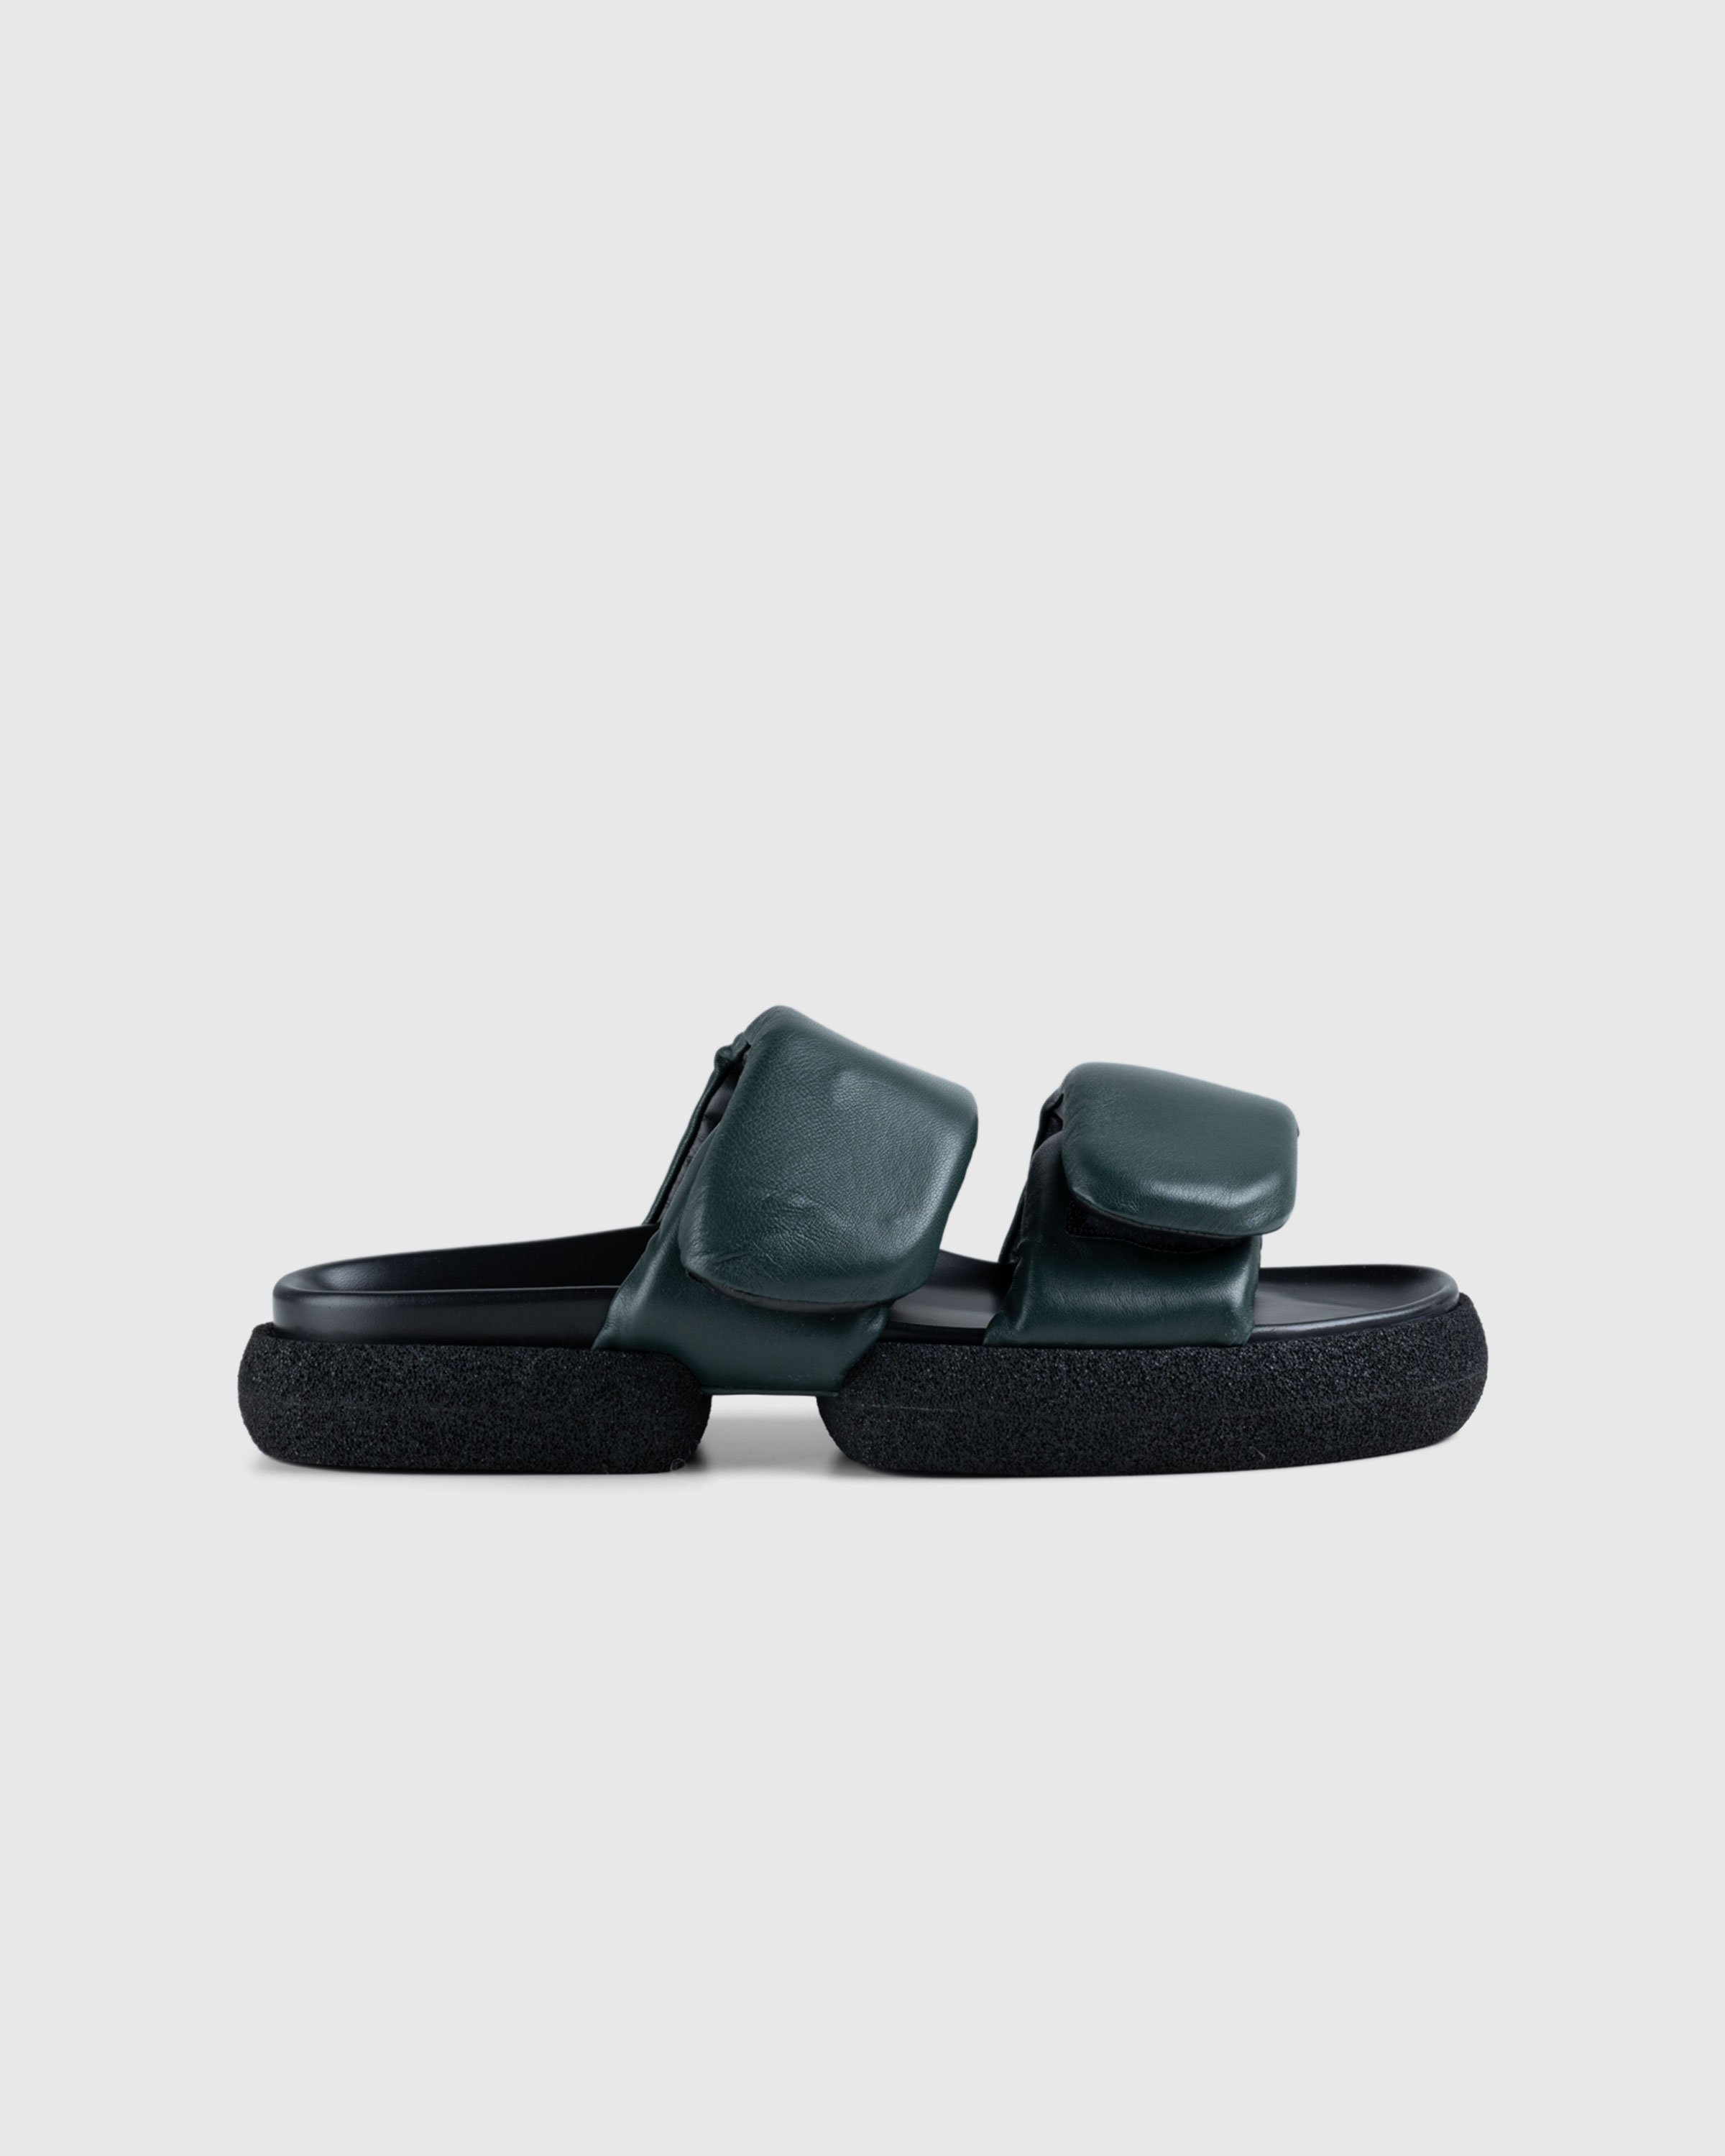 Dries van Noten - Leather Platform Sandals Green - Footwear - Green - Image 1